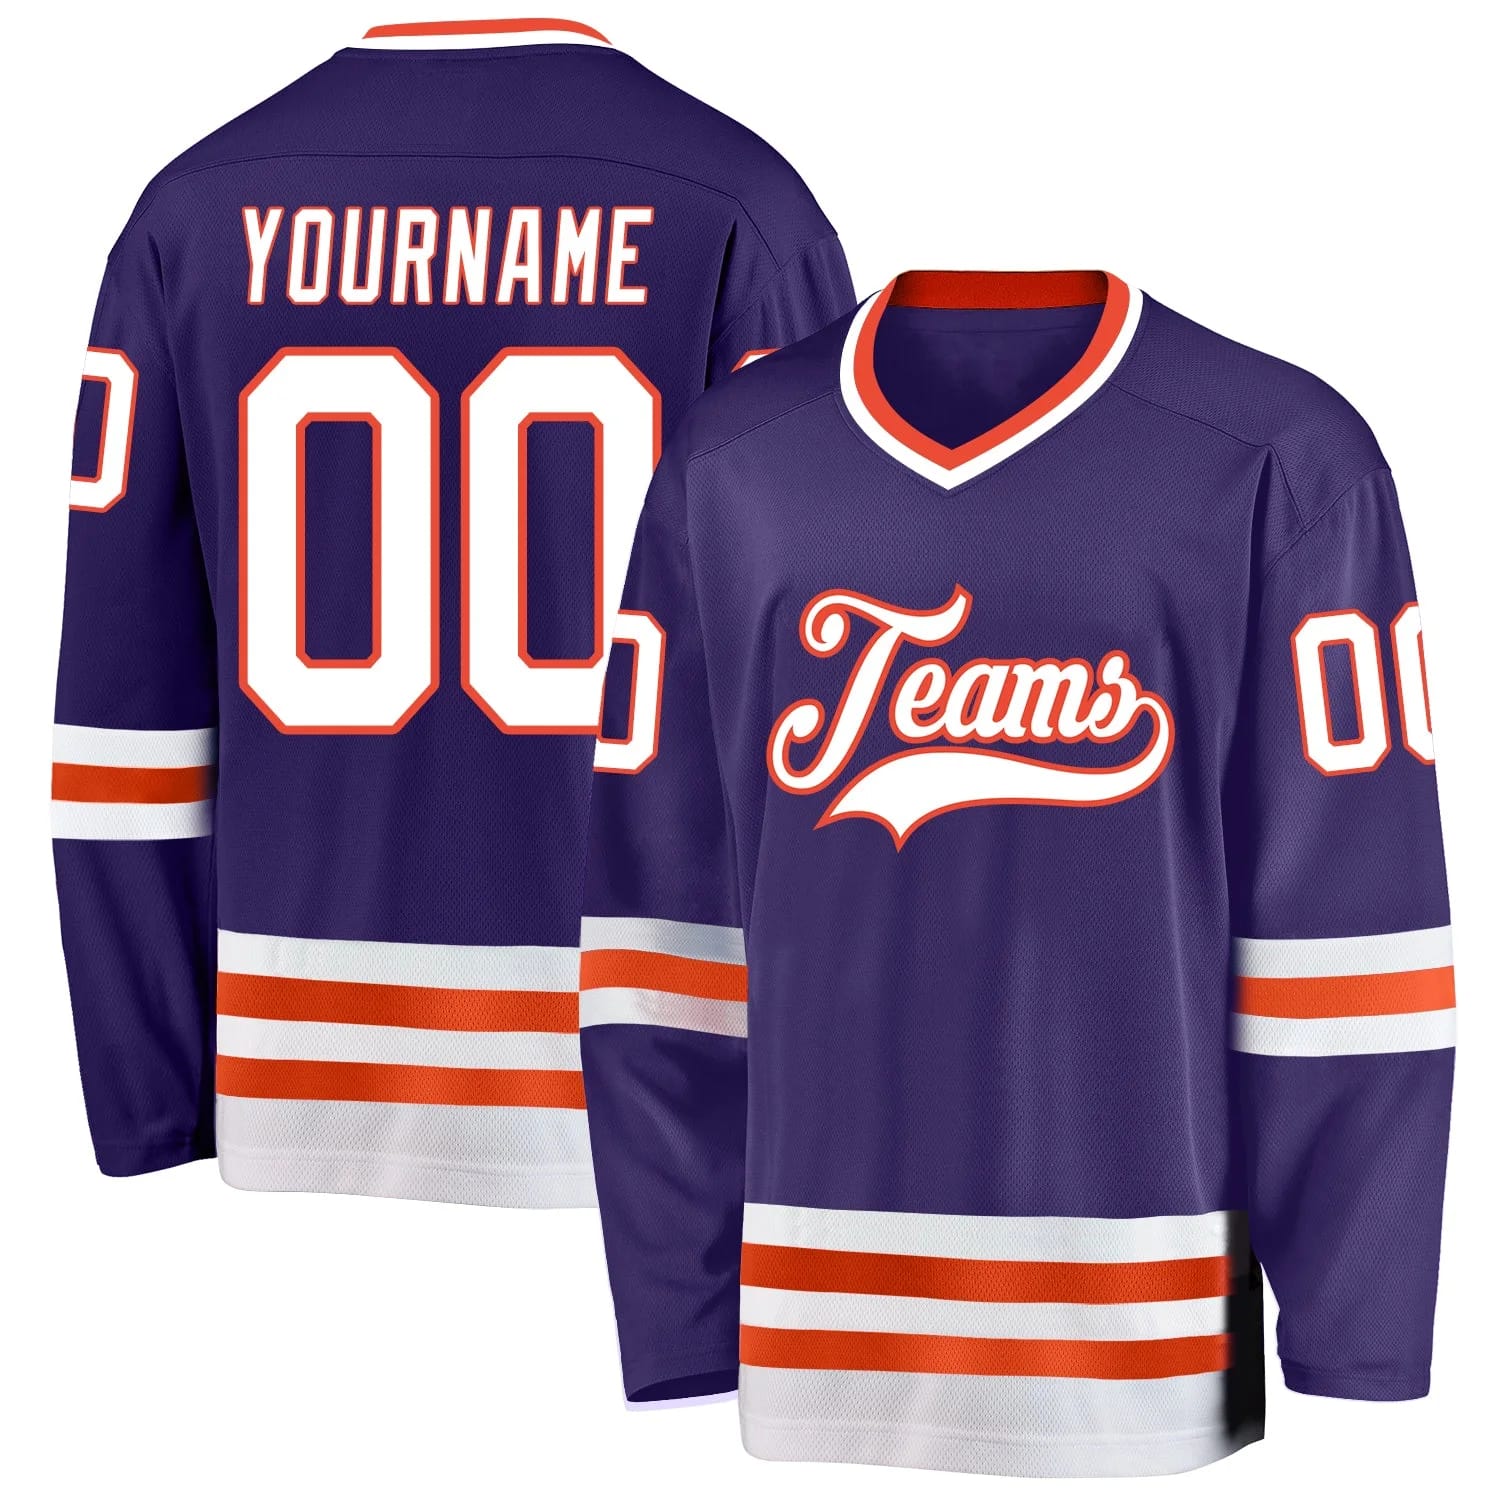 Stitched And Print Purple White-orange Hockey Jersey Custom